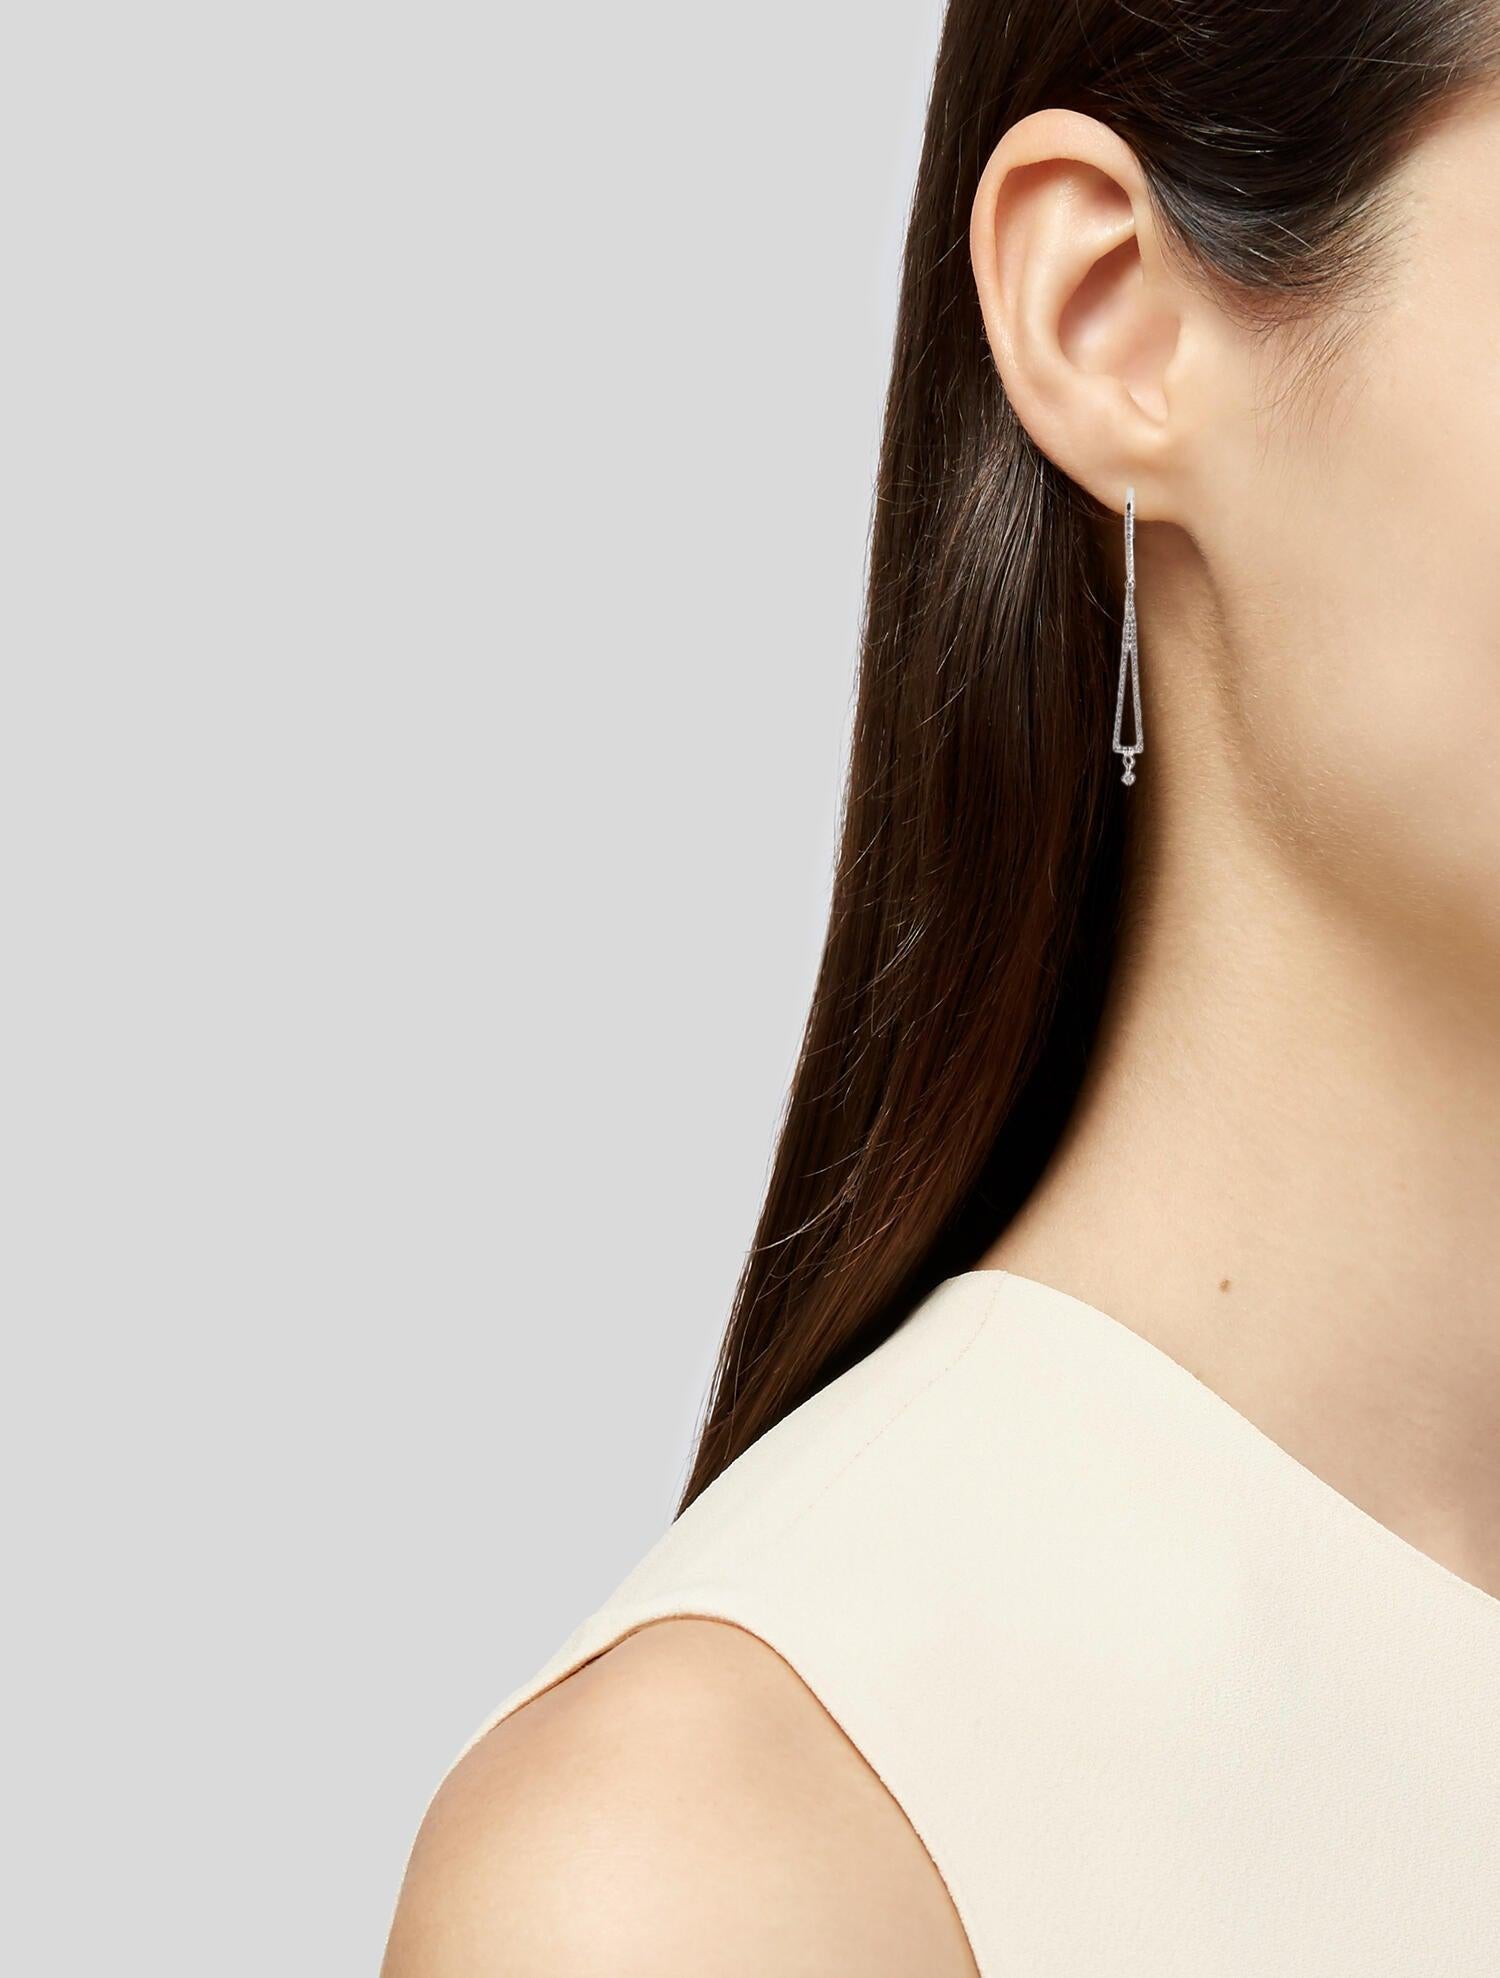 Women's Luxurious 14K Diamond Drop Earrings - Exquisite Jewelry Style, Timeless Elegance For Sale